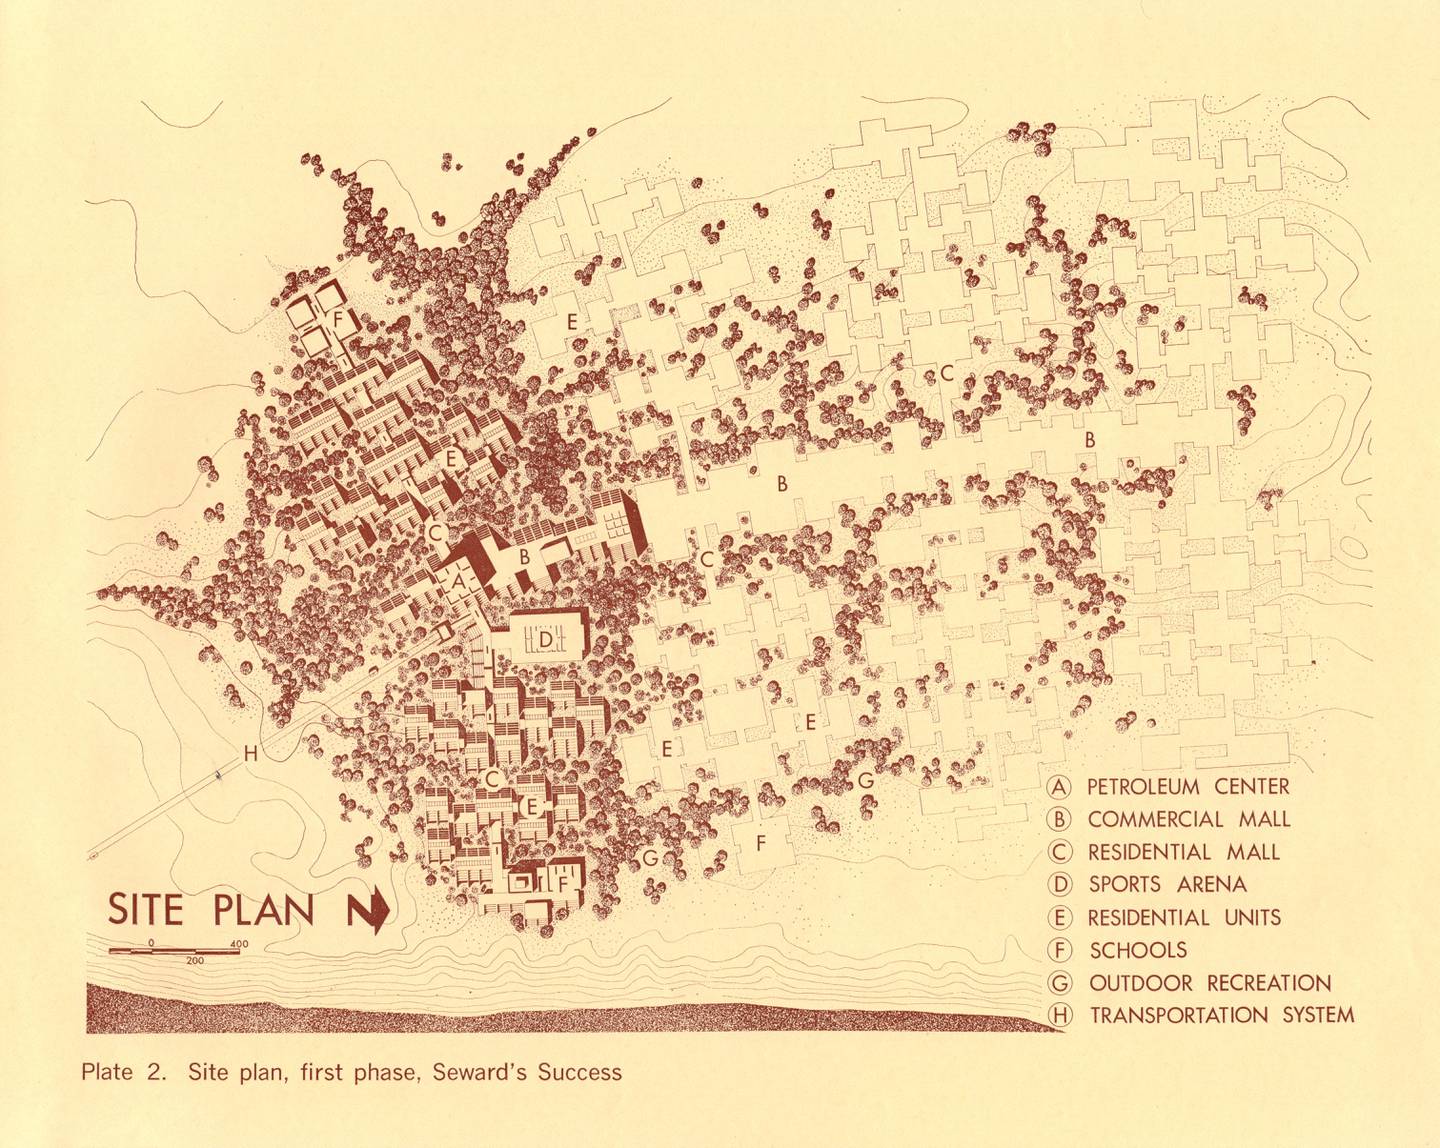 A 1969 site plan for Seward Success 21st century city